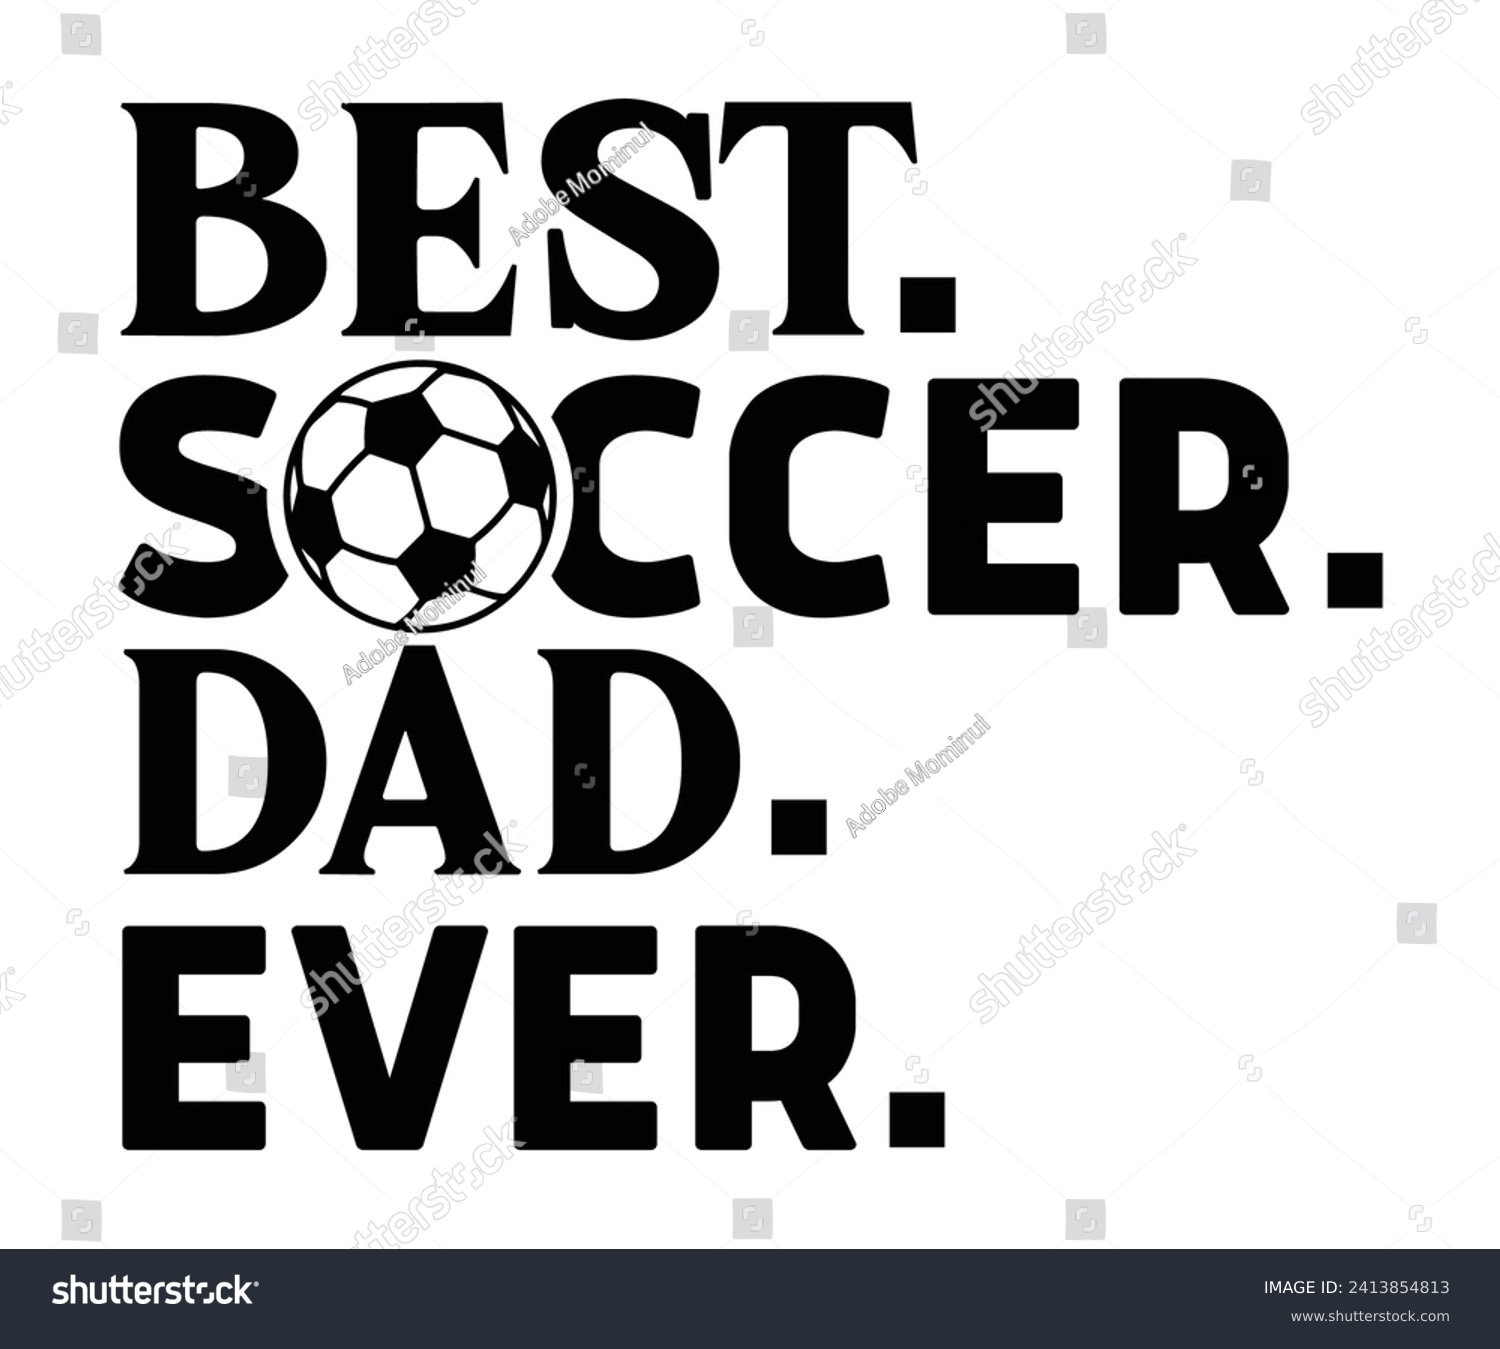 SVG of Best Soccer Dad Ever Svg,Soccer Svg,Soccer Quote Svg,Retro,Soccer Mom Shirt,Funny Shirt,Soccar Player Shirt,Game Day Shirt,Gift For Soccer,Dad of Soccer,Soccer Mascot,Soccer Football,Groovy Design, svg